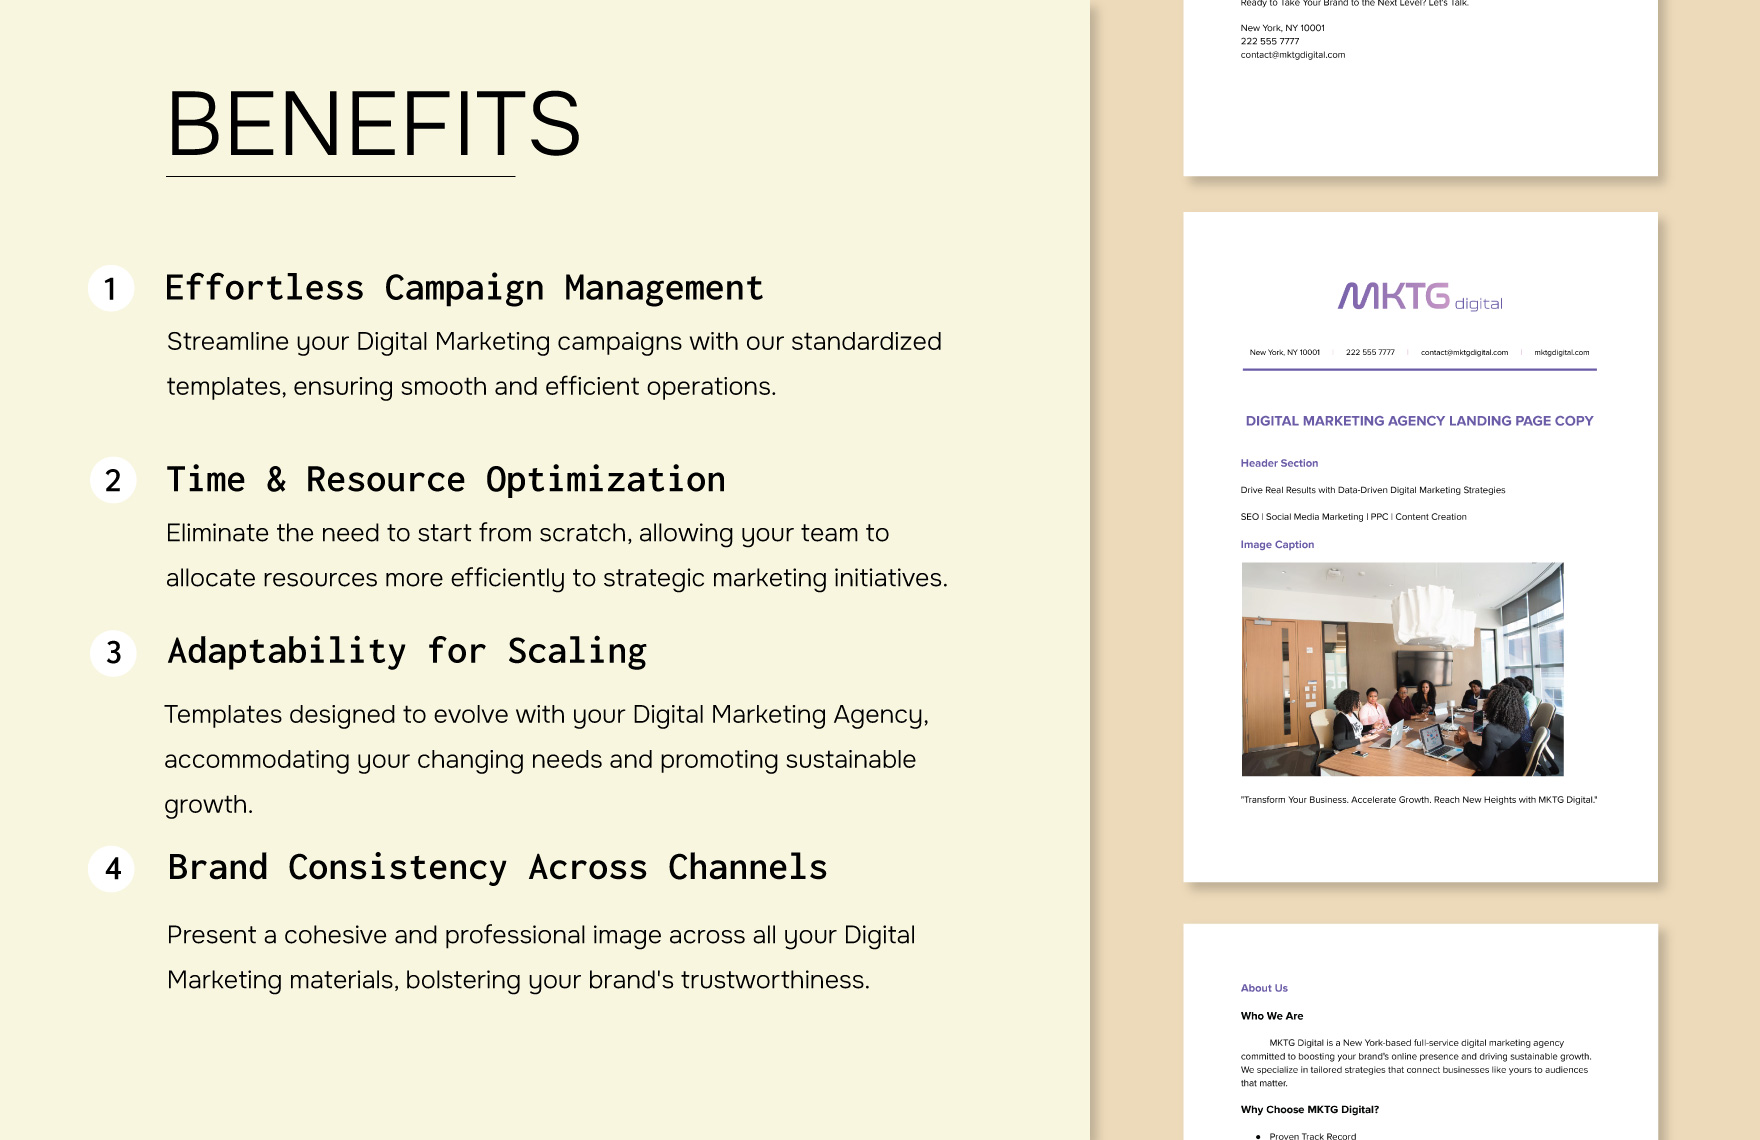 Digital Marketing Agency Landing Page Copy Template